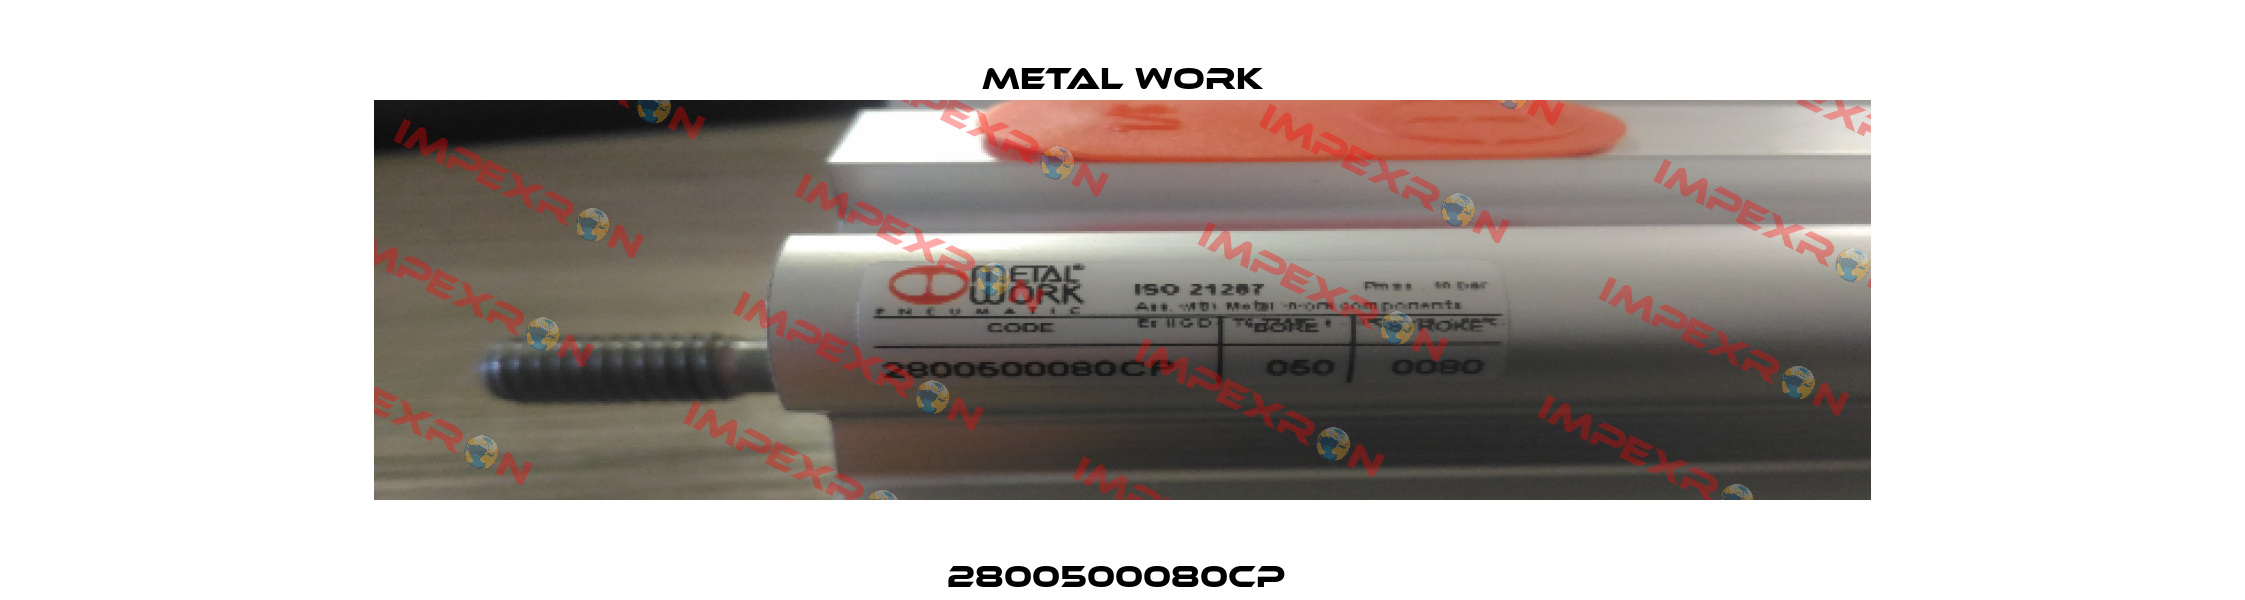 2800500080CP  Metal Work